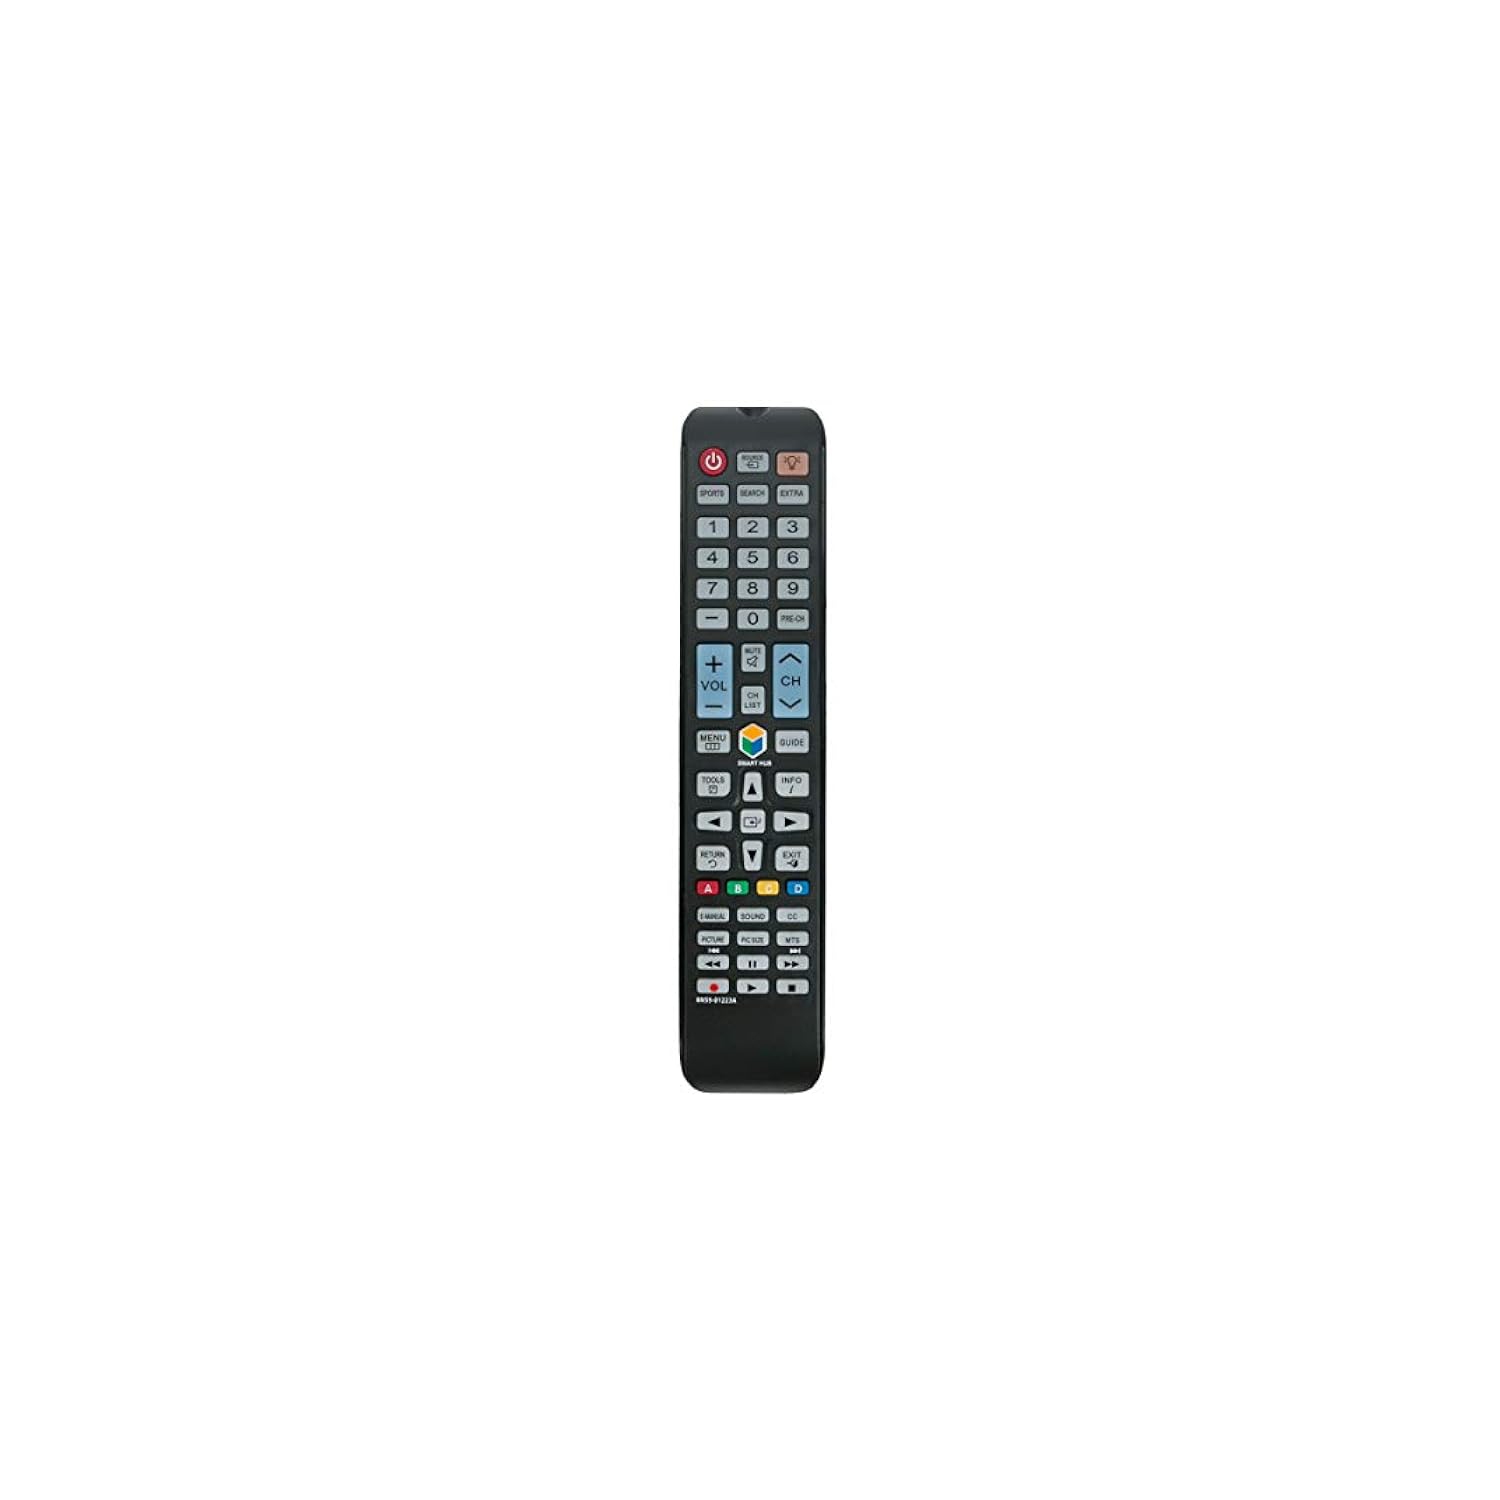 Refurbished (Good) Samsung TV Remote Control, Model: BN59-01223A